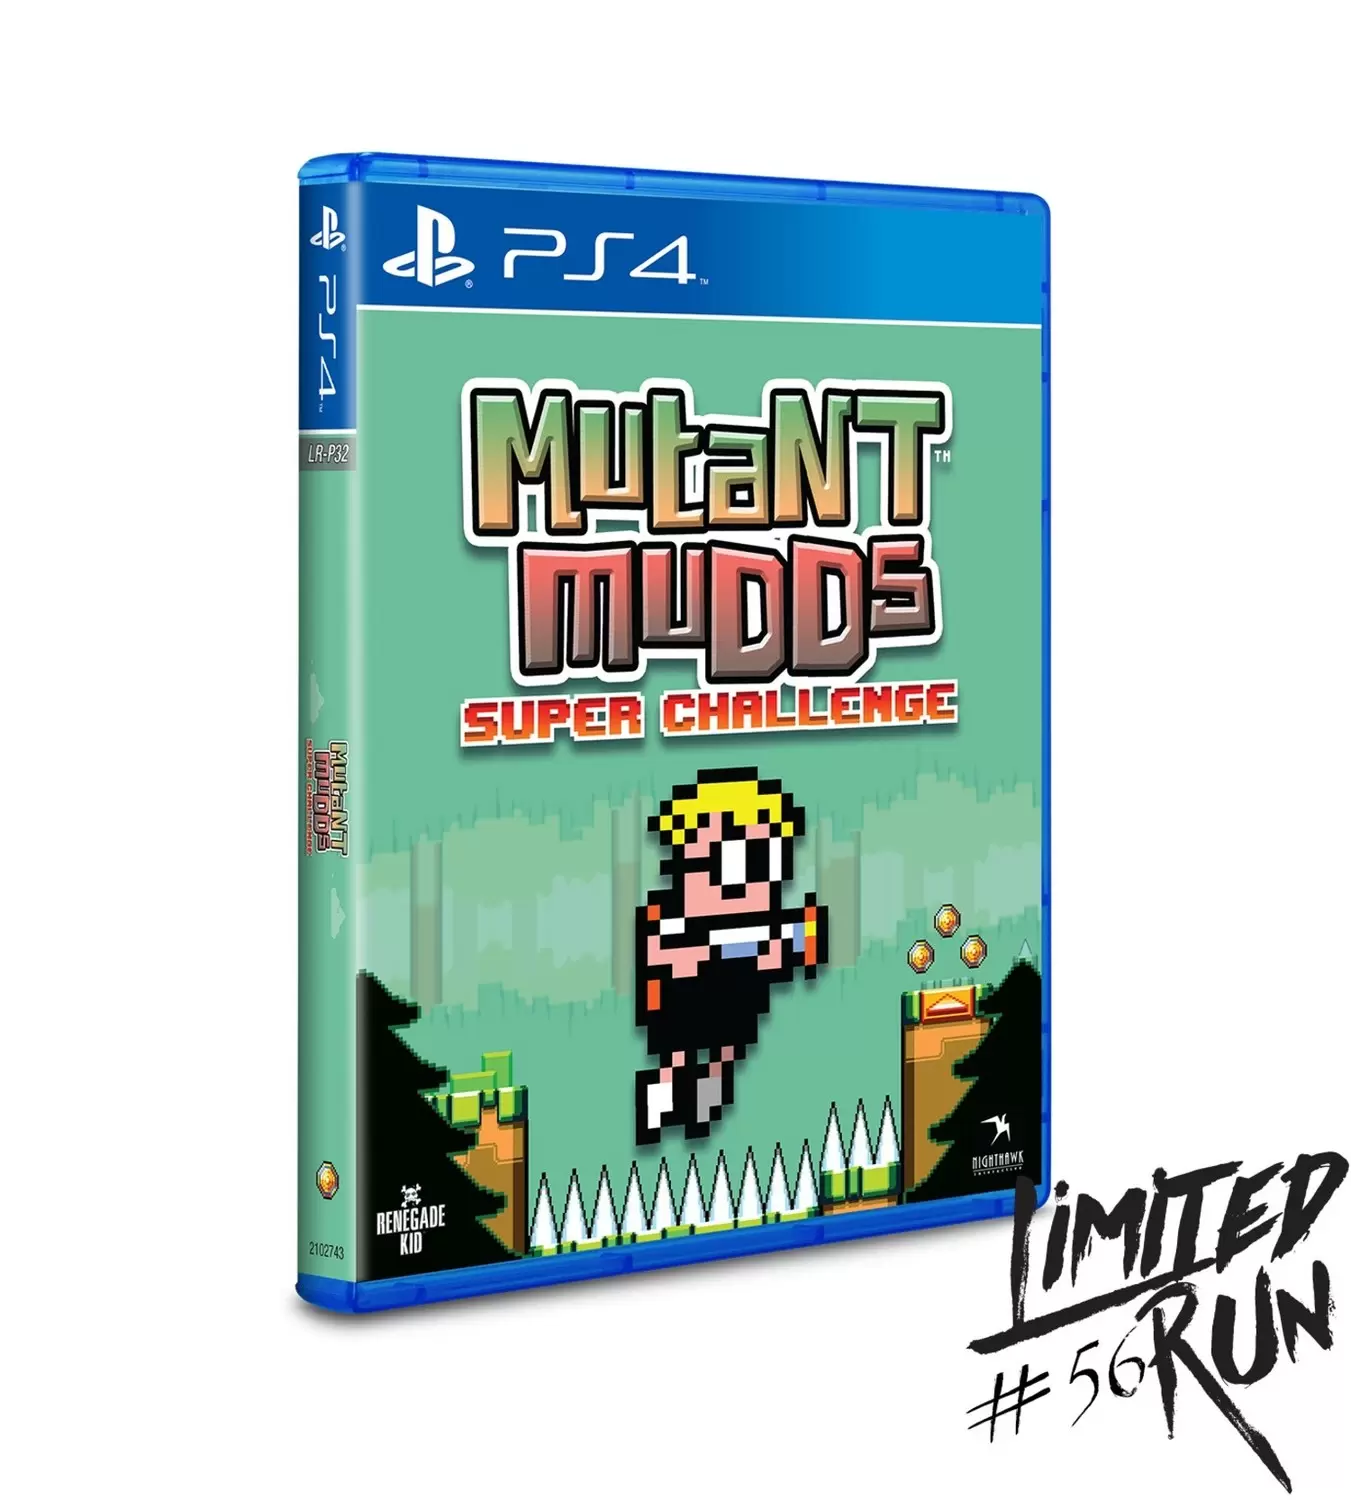 PS4 Games - Mutant Mudds Super Challenge